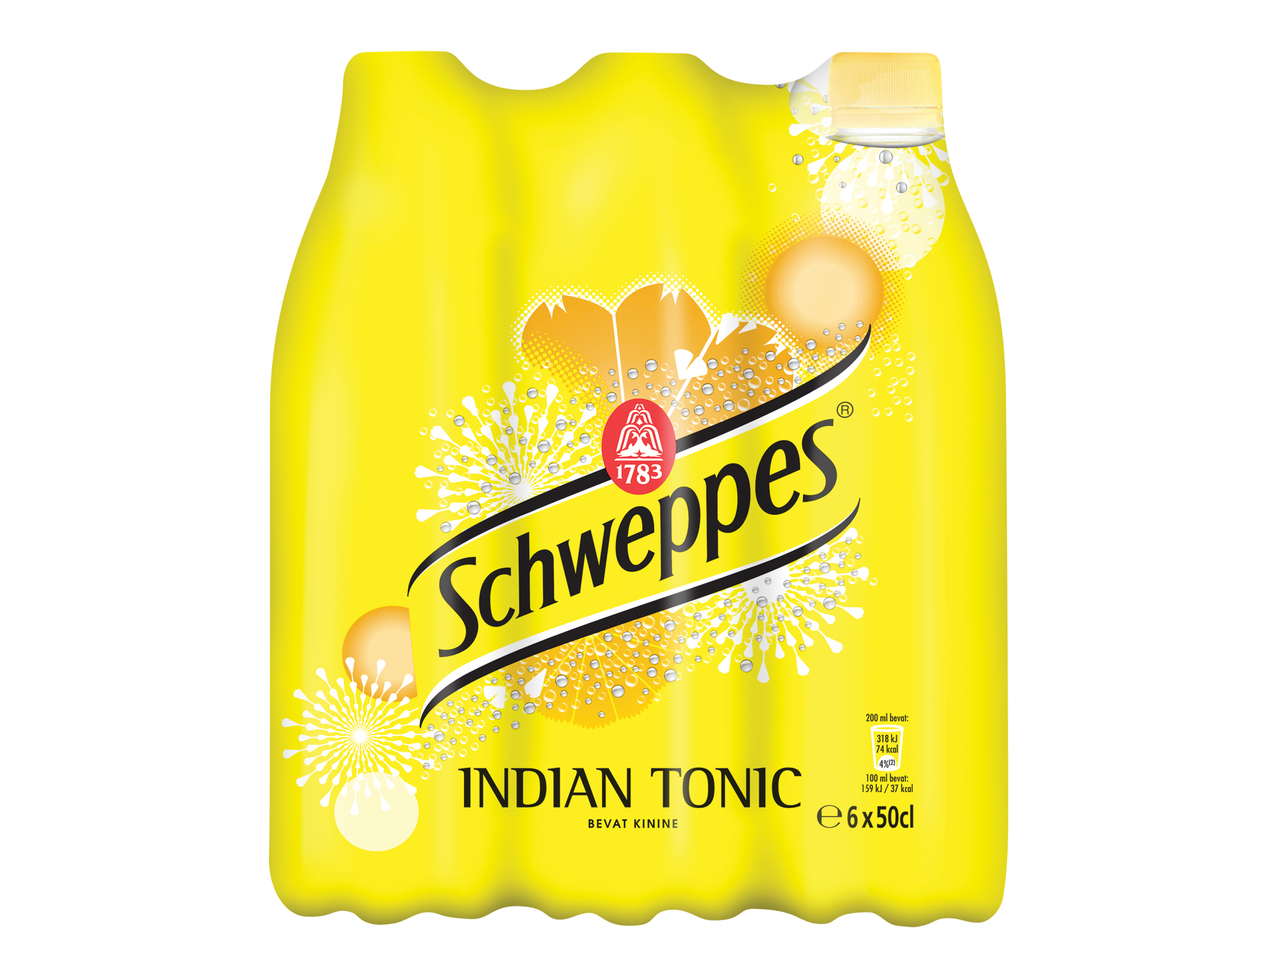 Indian tonic